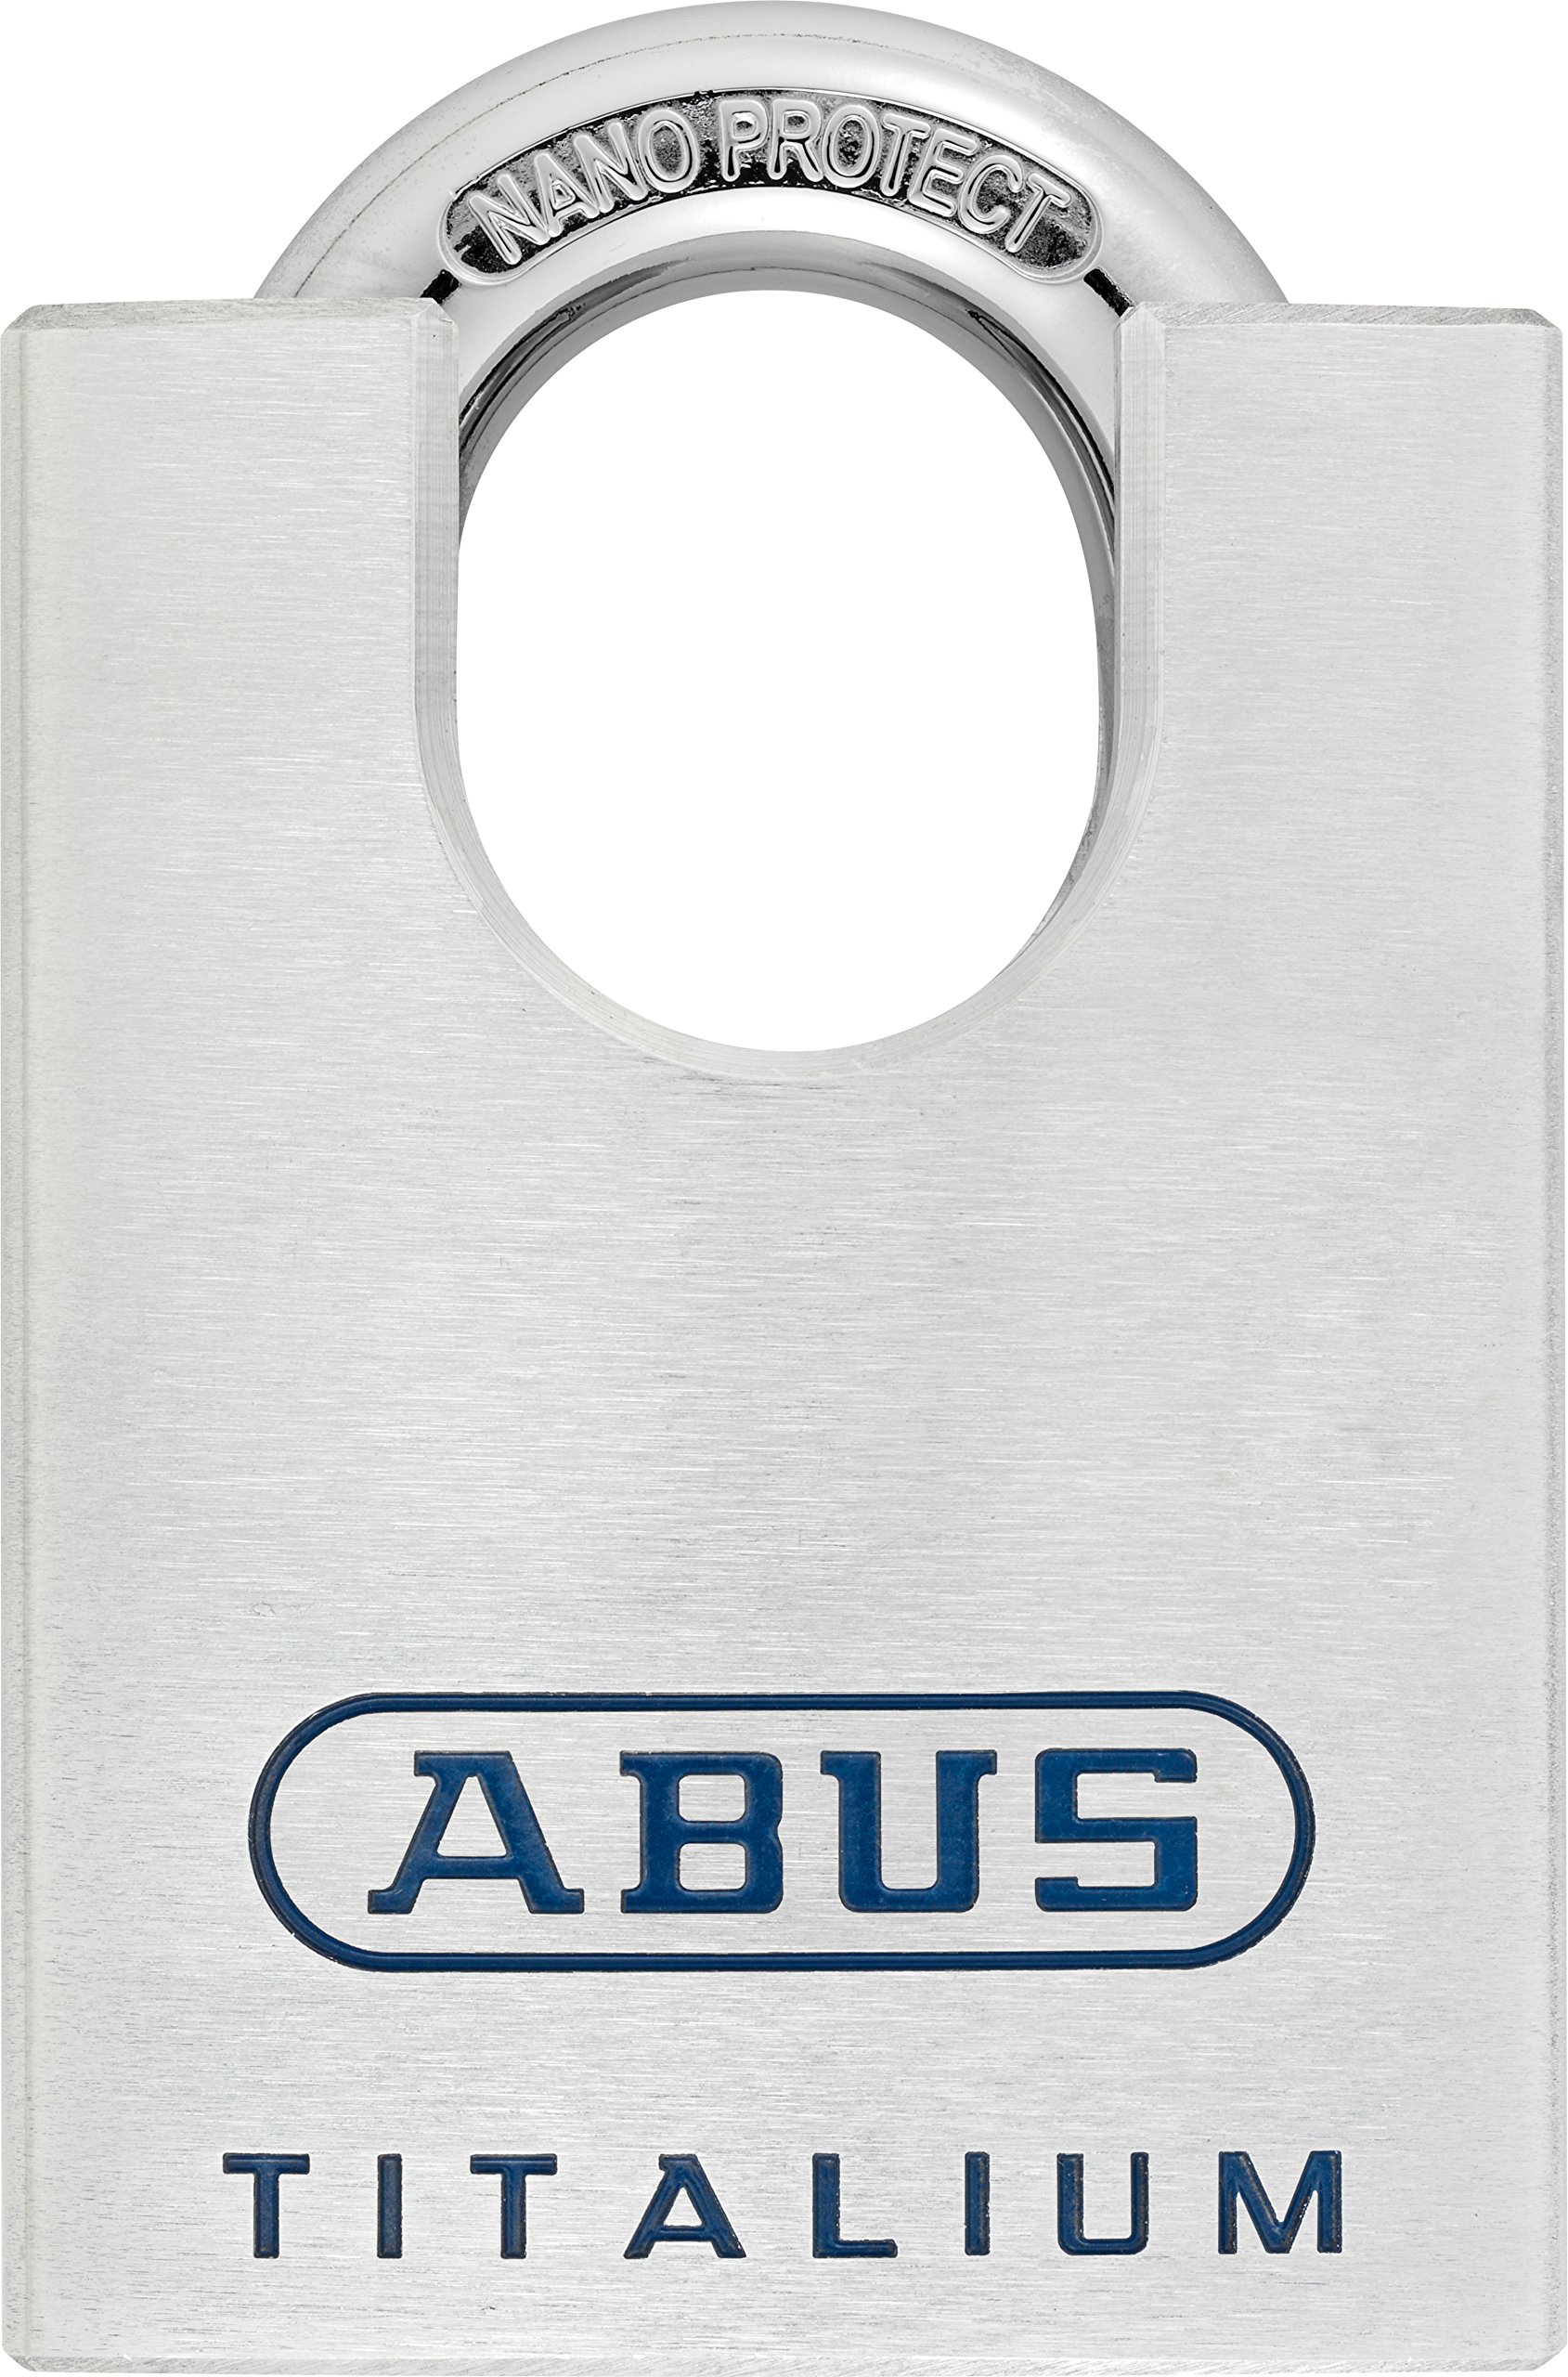 ABUS Titalium Vorhängeschloss 96CSTI/50 - leichter Schlosskörper aus massivem Spezial-Aluminium - mit integriertem Bügelschutz - ABUS-Sicherheitslevel 8 - Silber